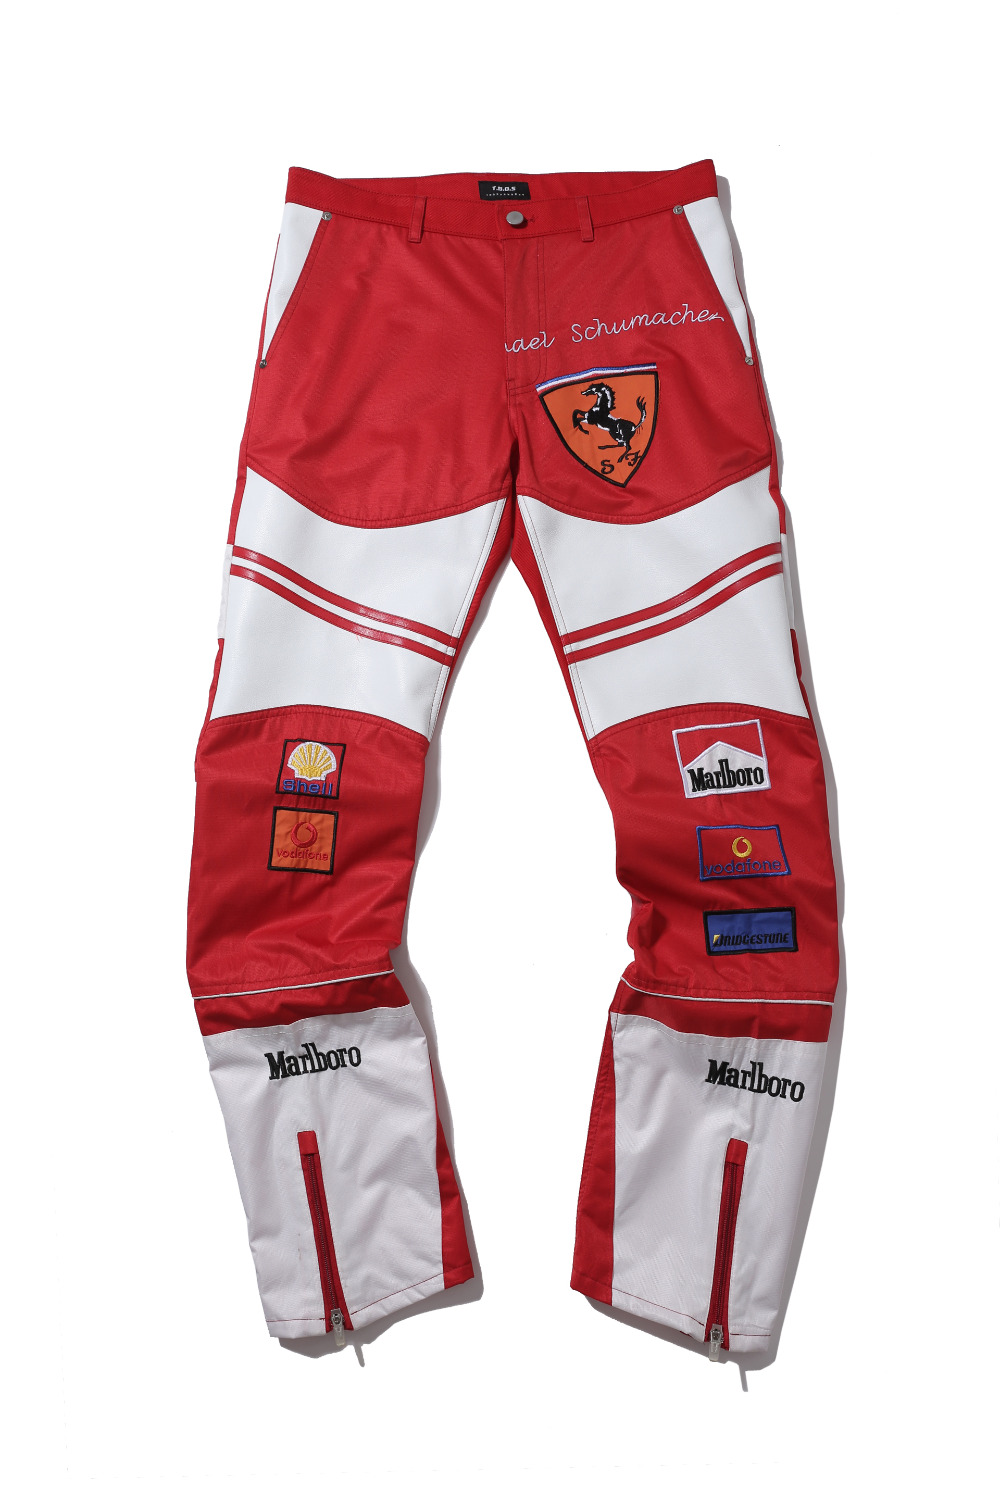 Marlboro racing detail pants